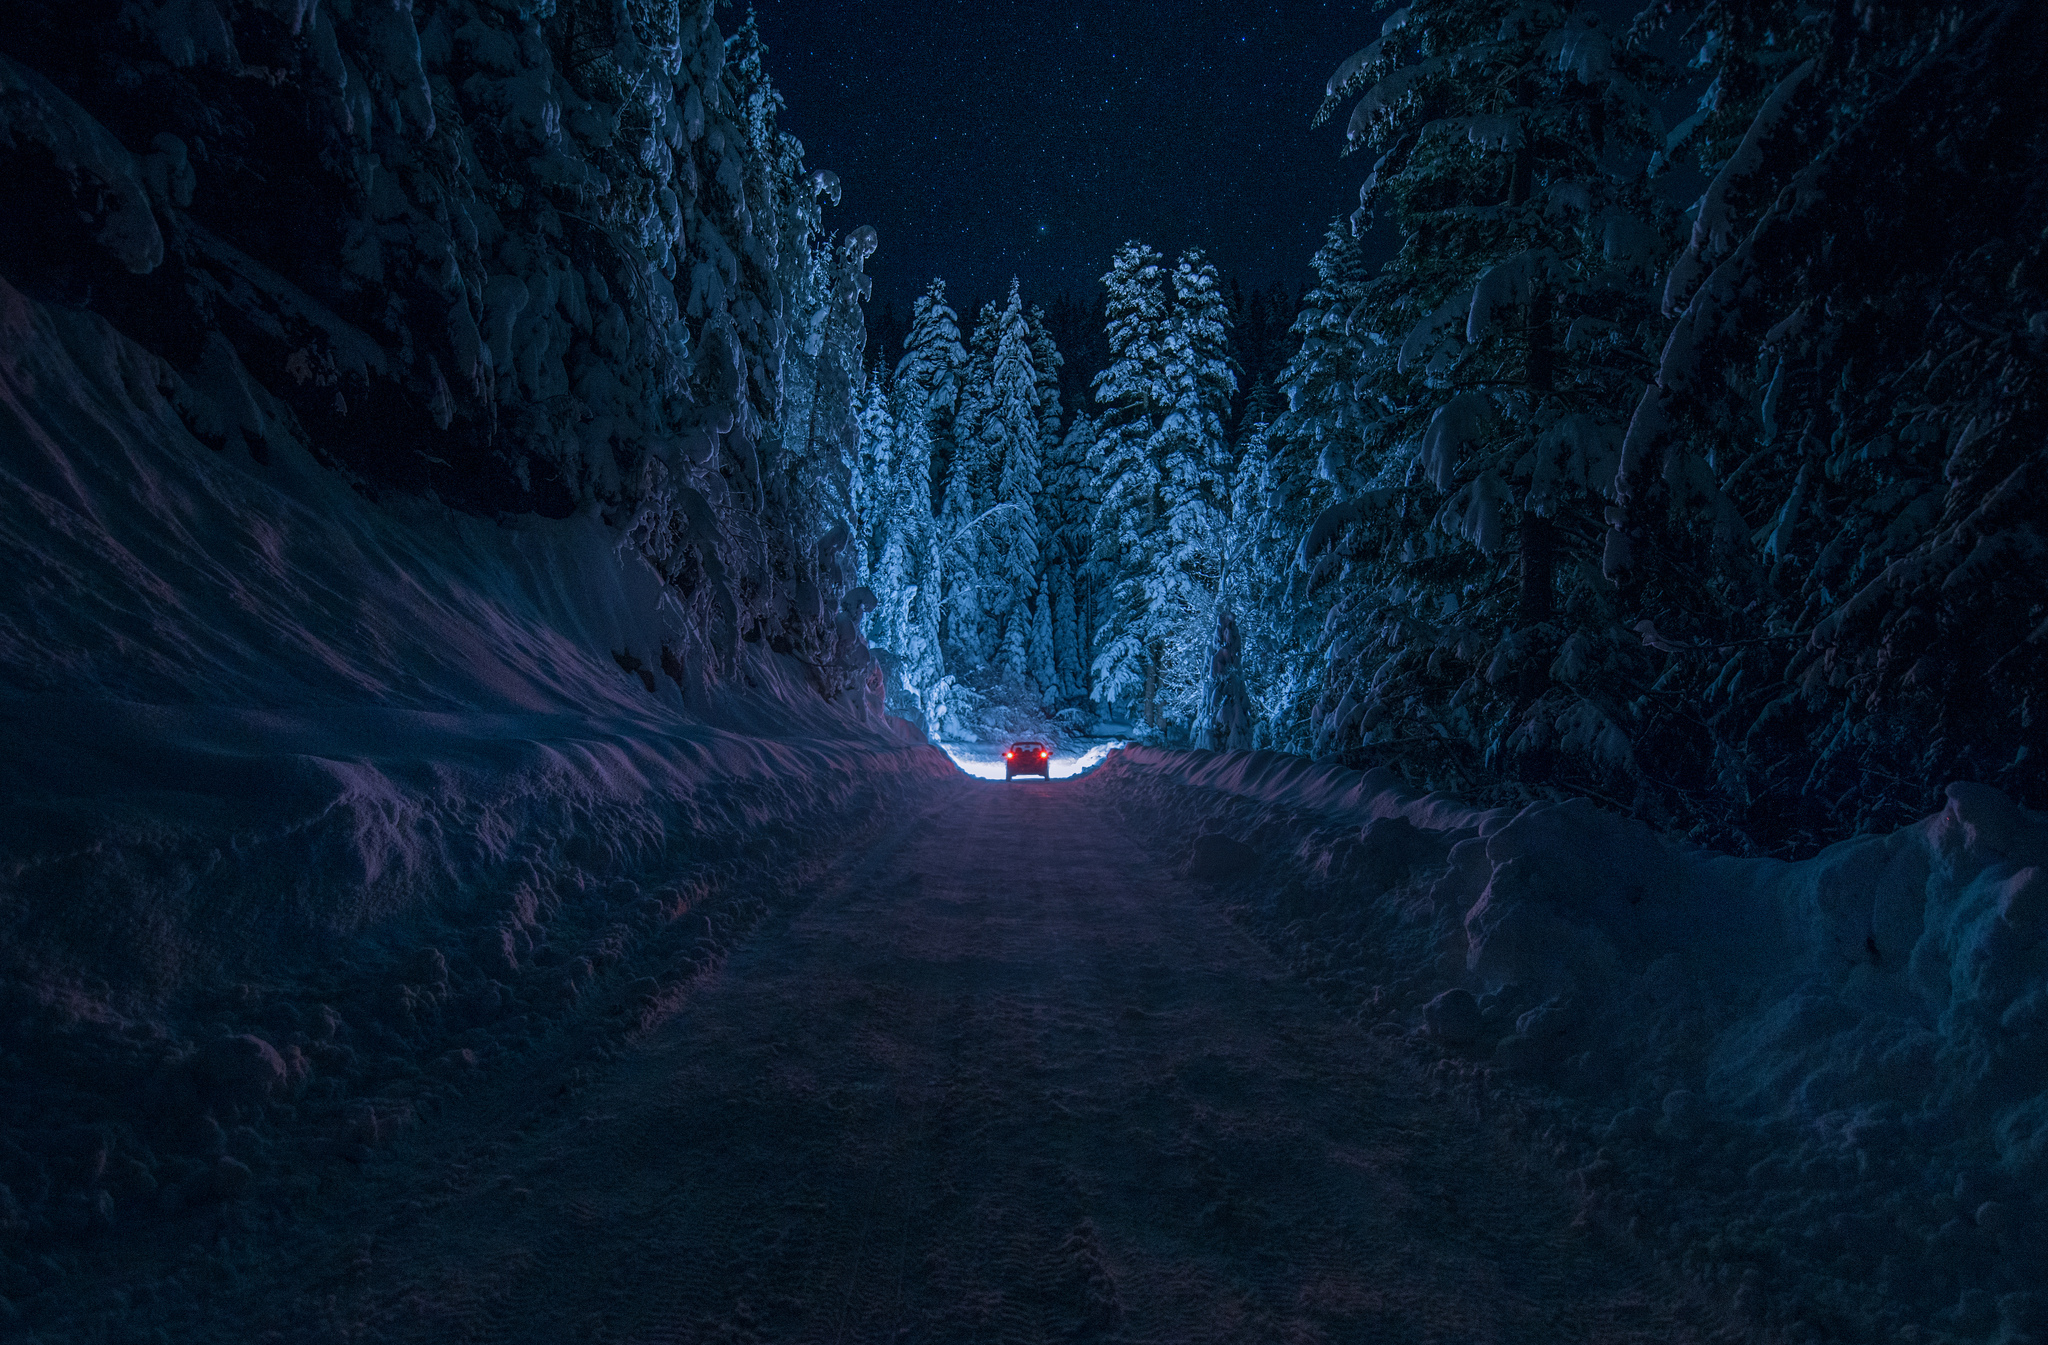  winter road snow forest night car light sky stars trees wallpaper